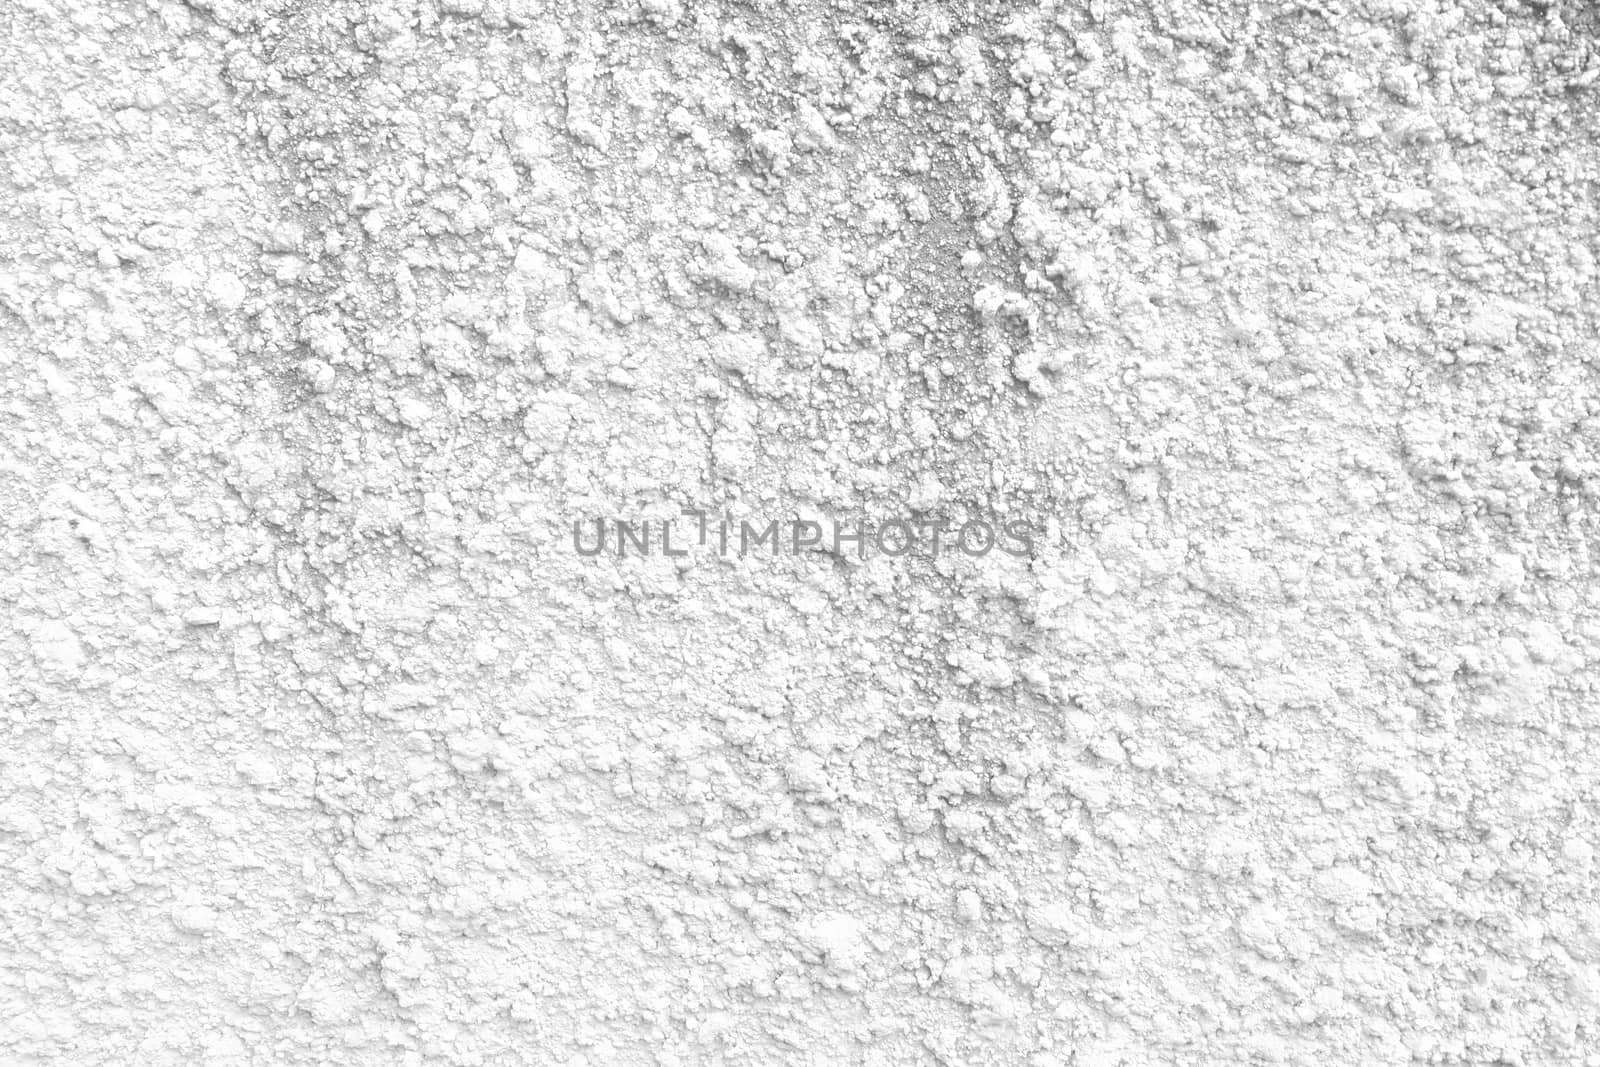 White Grunge Concrete Texture Wall.